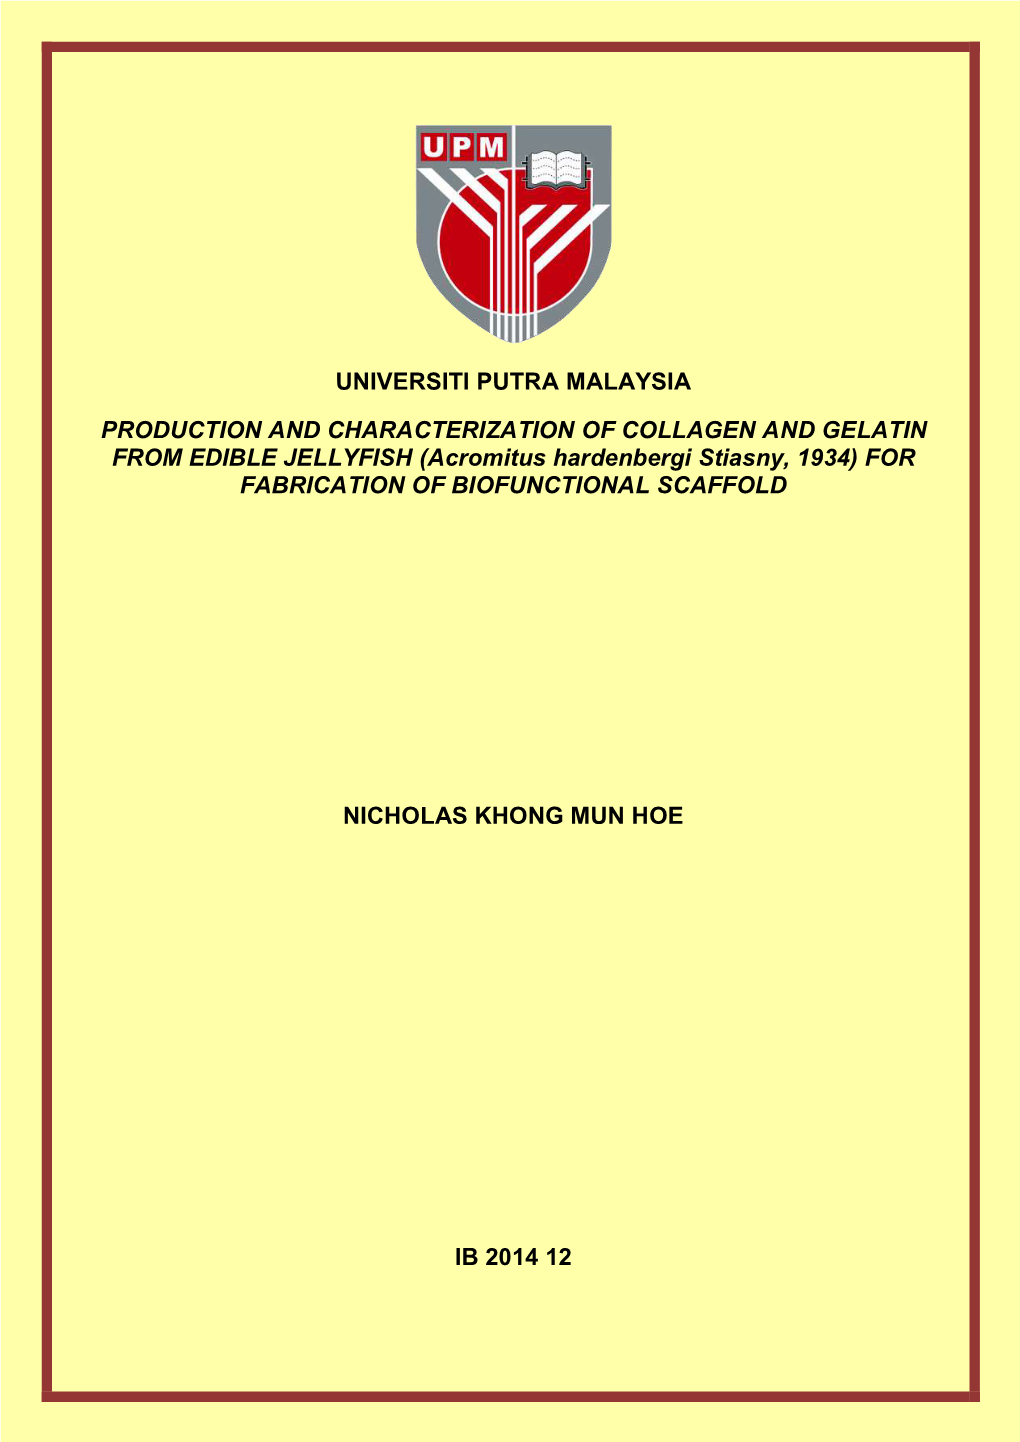 Universiti Putra Malaysia Nicholas Khong Mun Hoe Ib